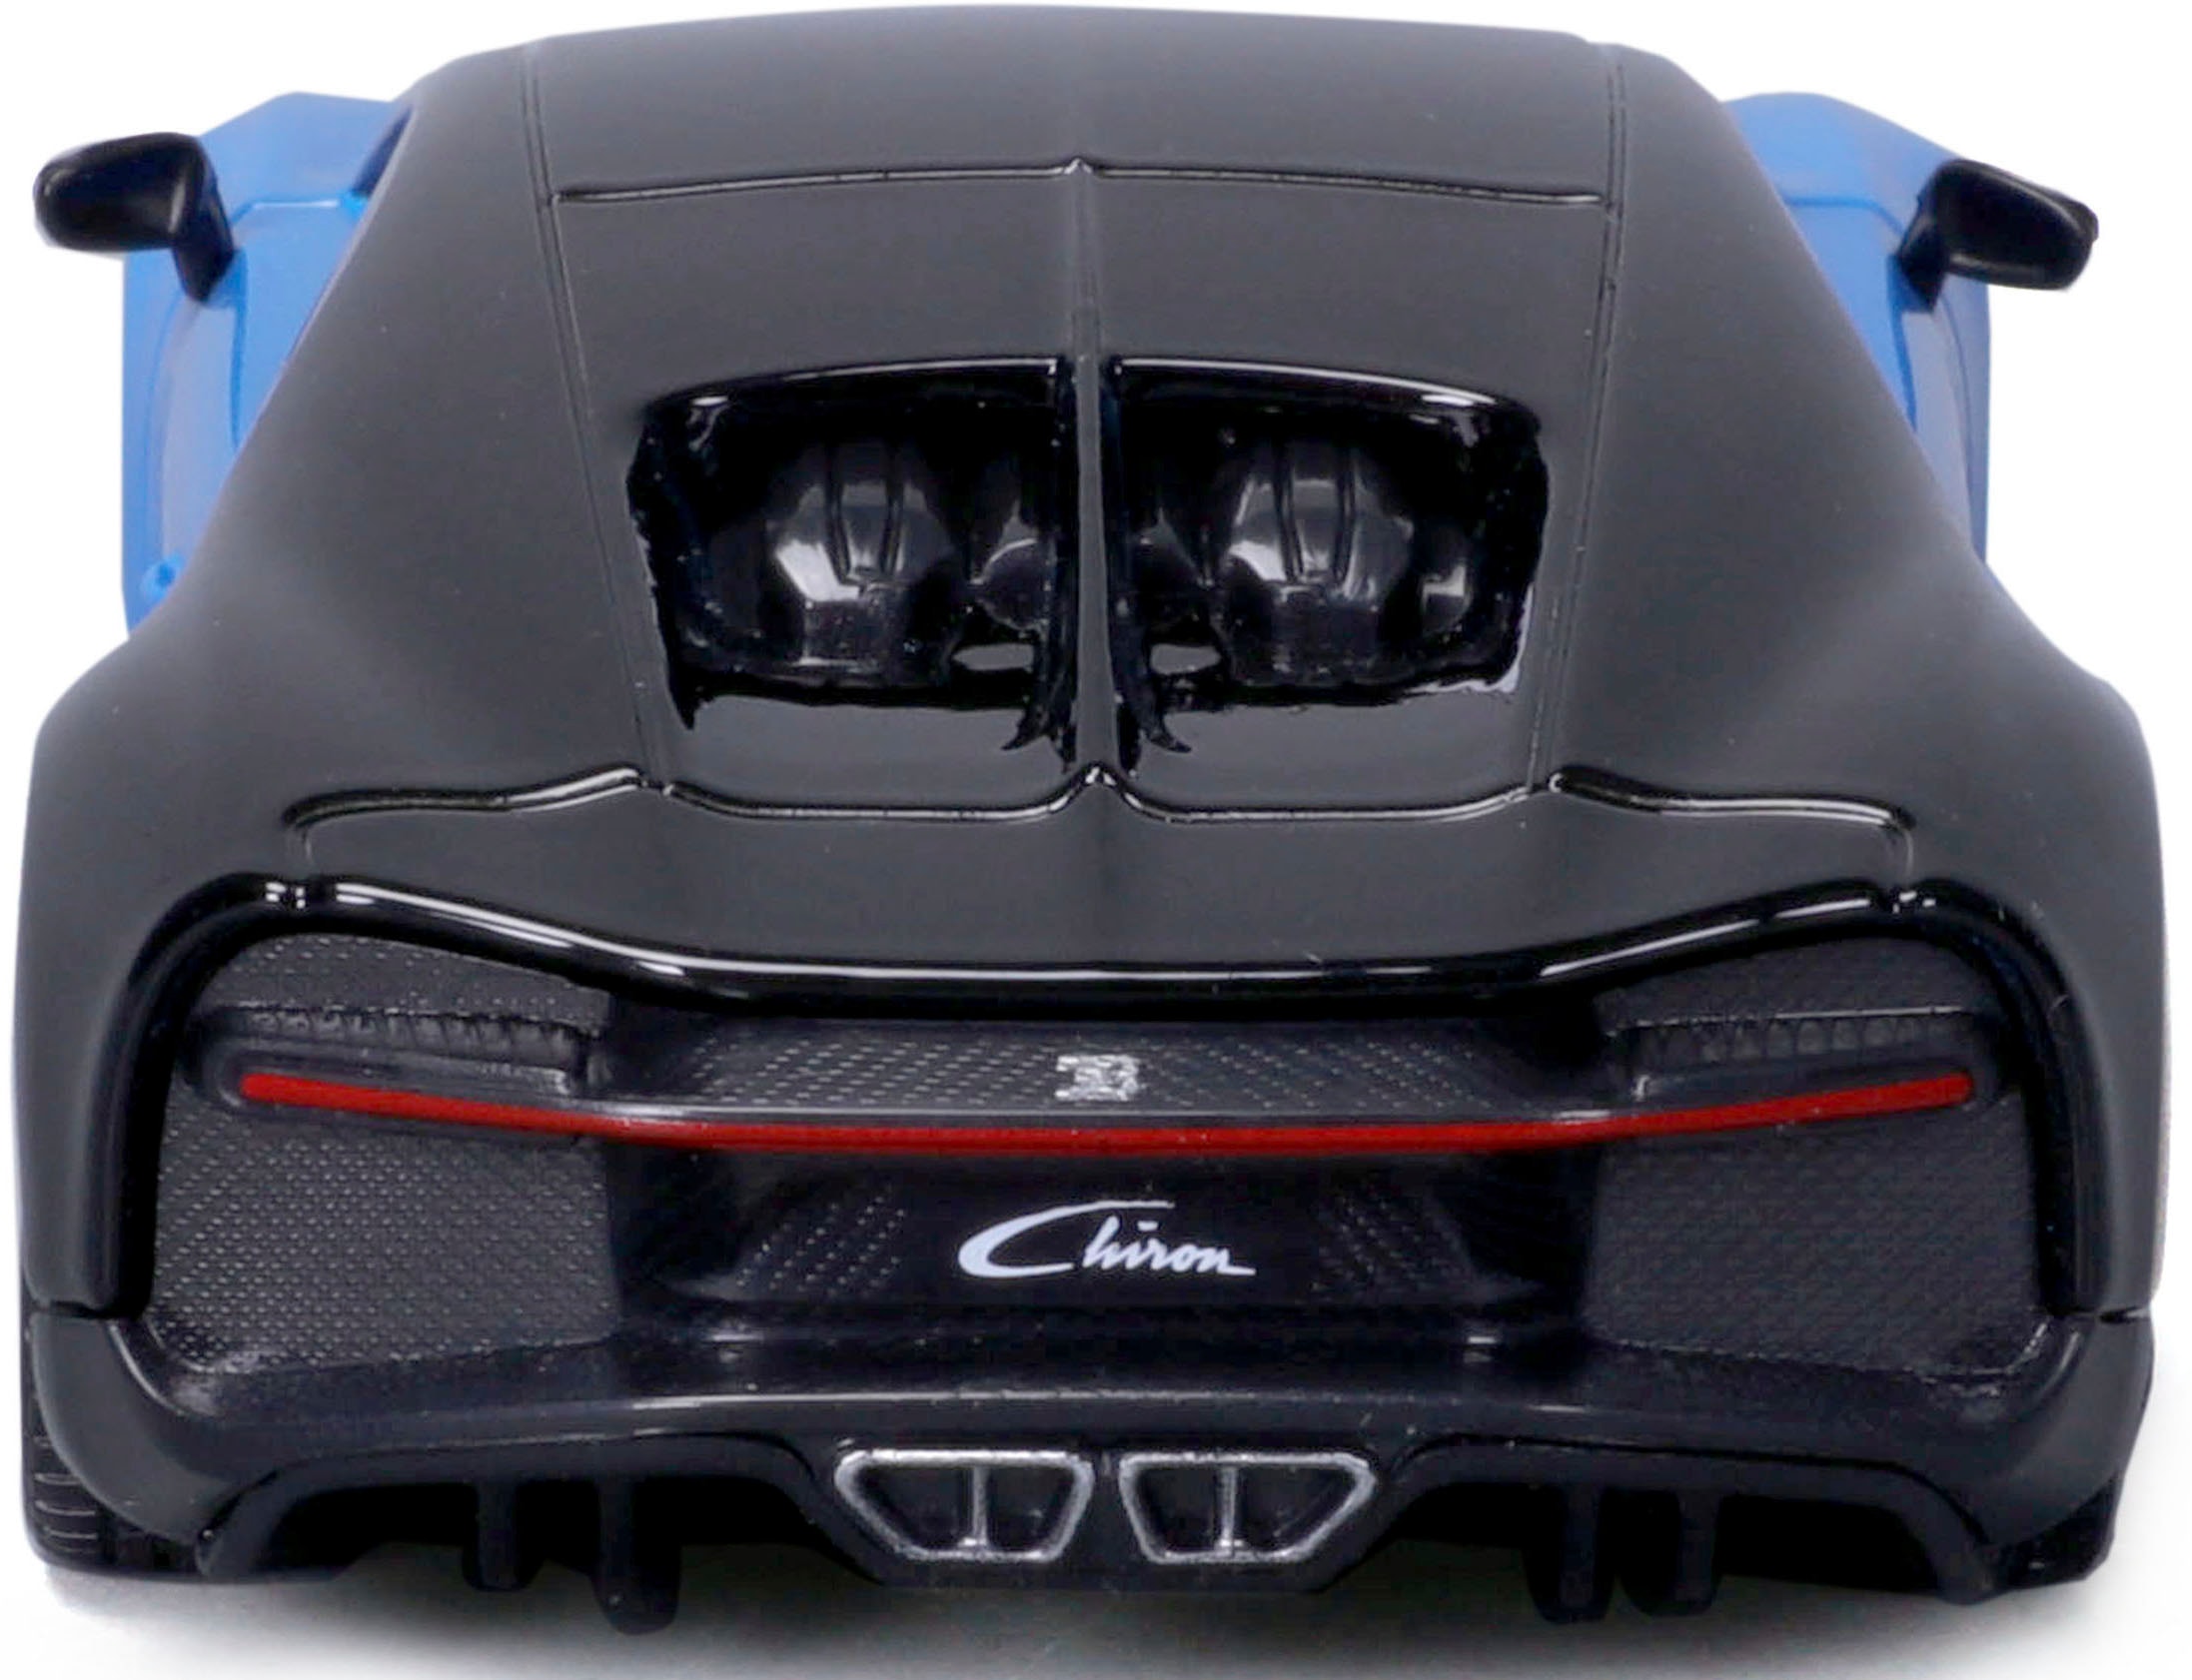 Maisto Tech RC-Auto »Bugatti Chiron«, BLUETOOTH 5.0, mit Licht